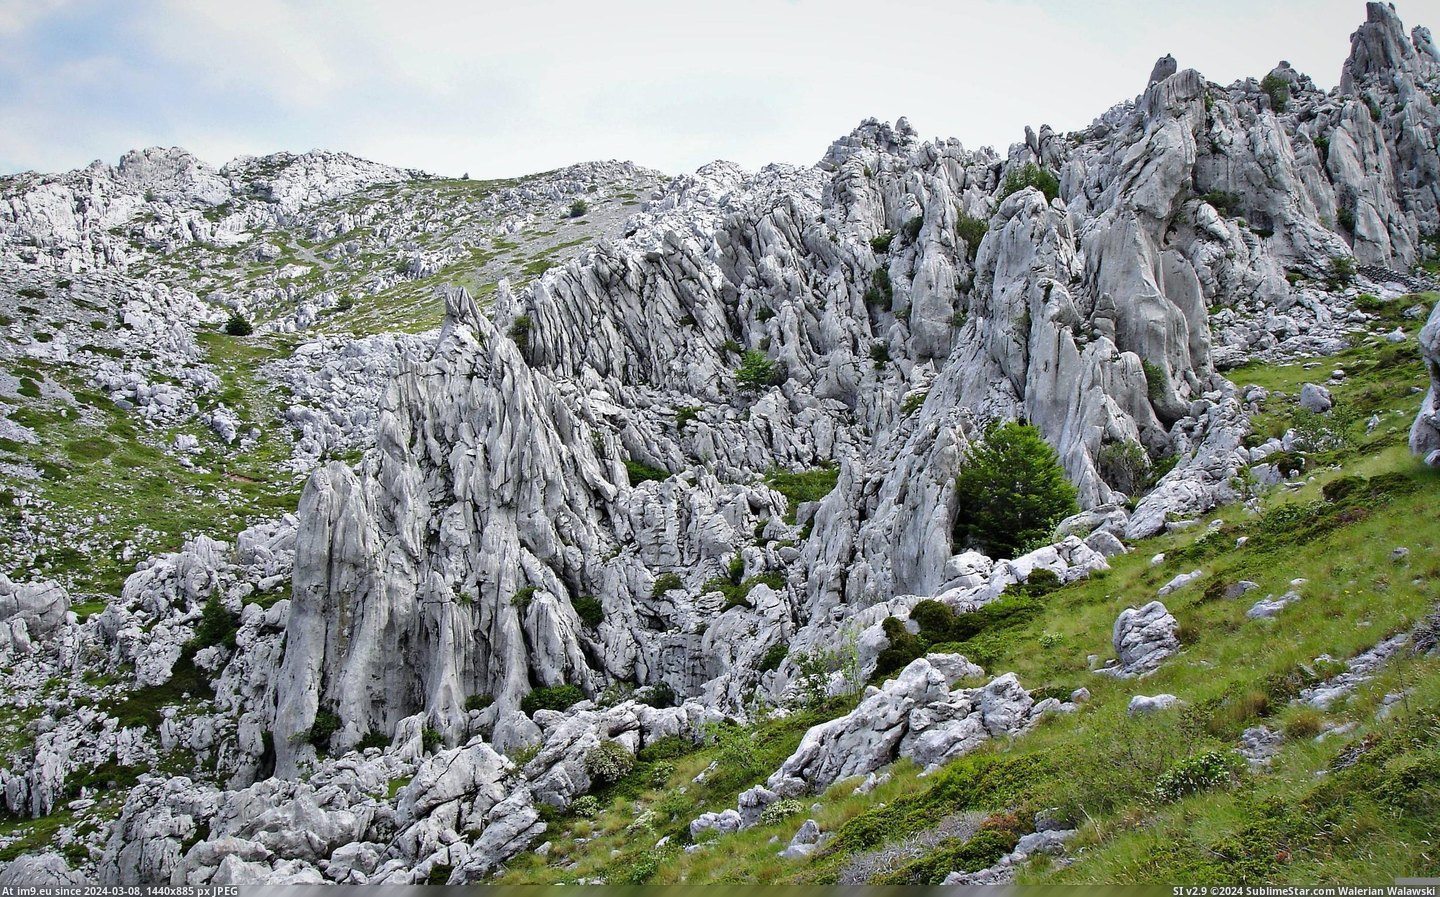  #Croatia  [Earthporn] Tulove grede, NP Velebit, Croatia  [2458x1523] Pic. (Image of album My r/EARTHPORN favs))